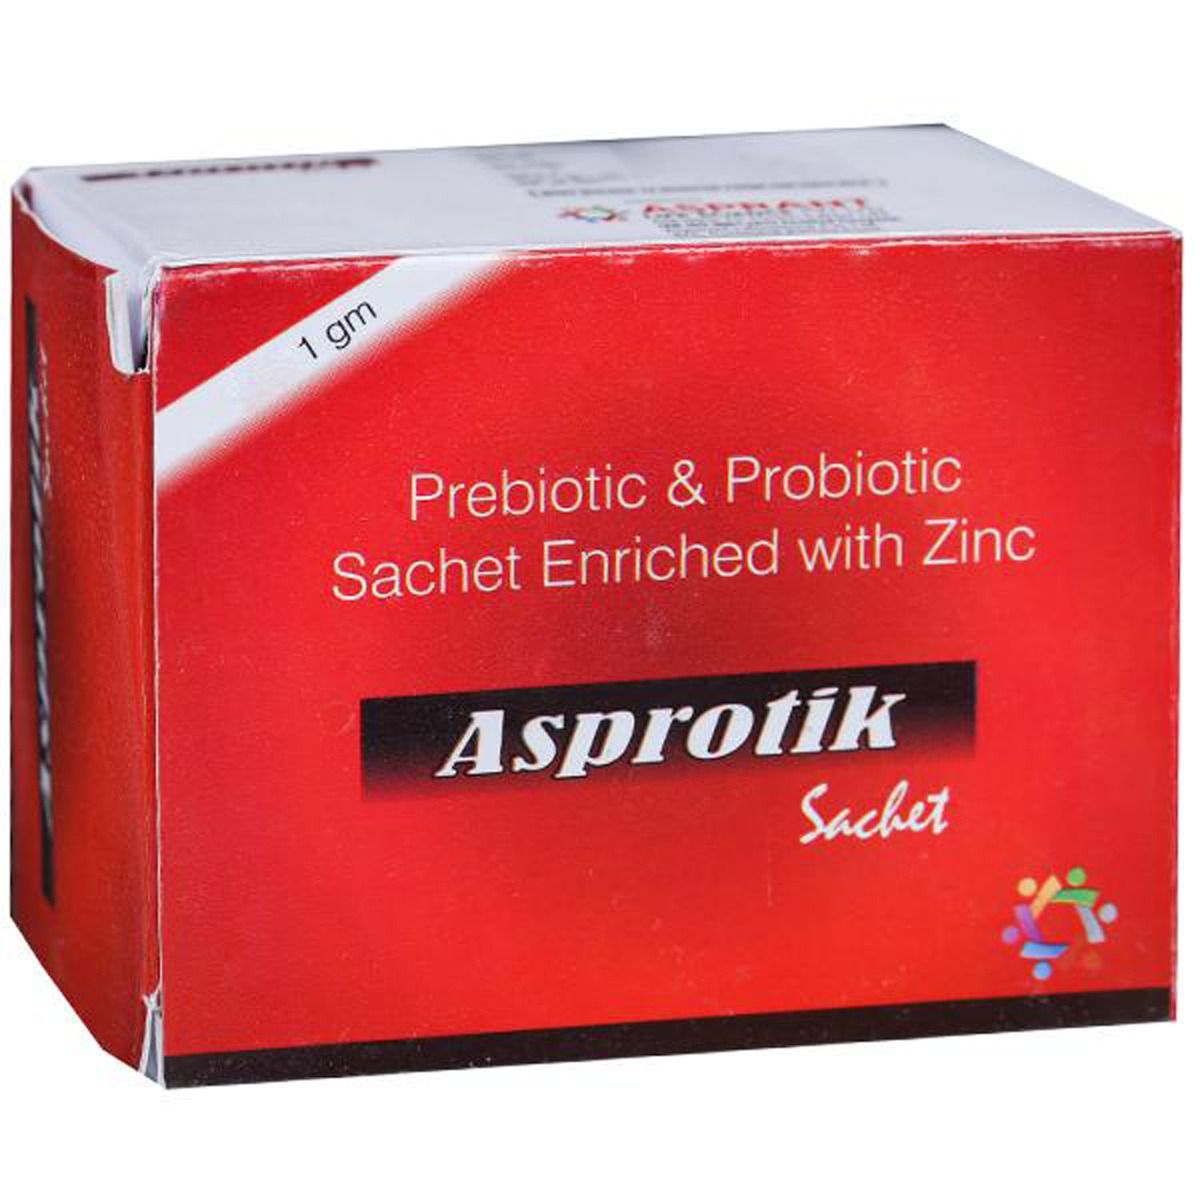 Asprotik Sachet 1gm, Pack of 1 